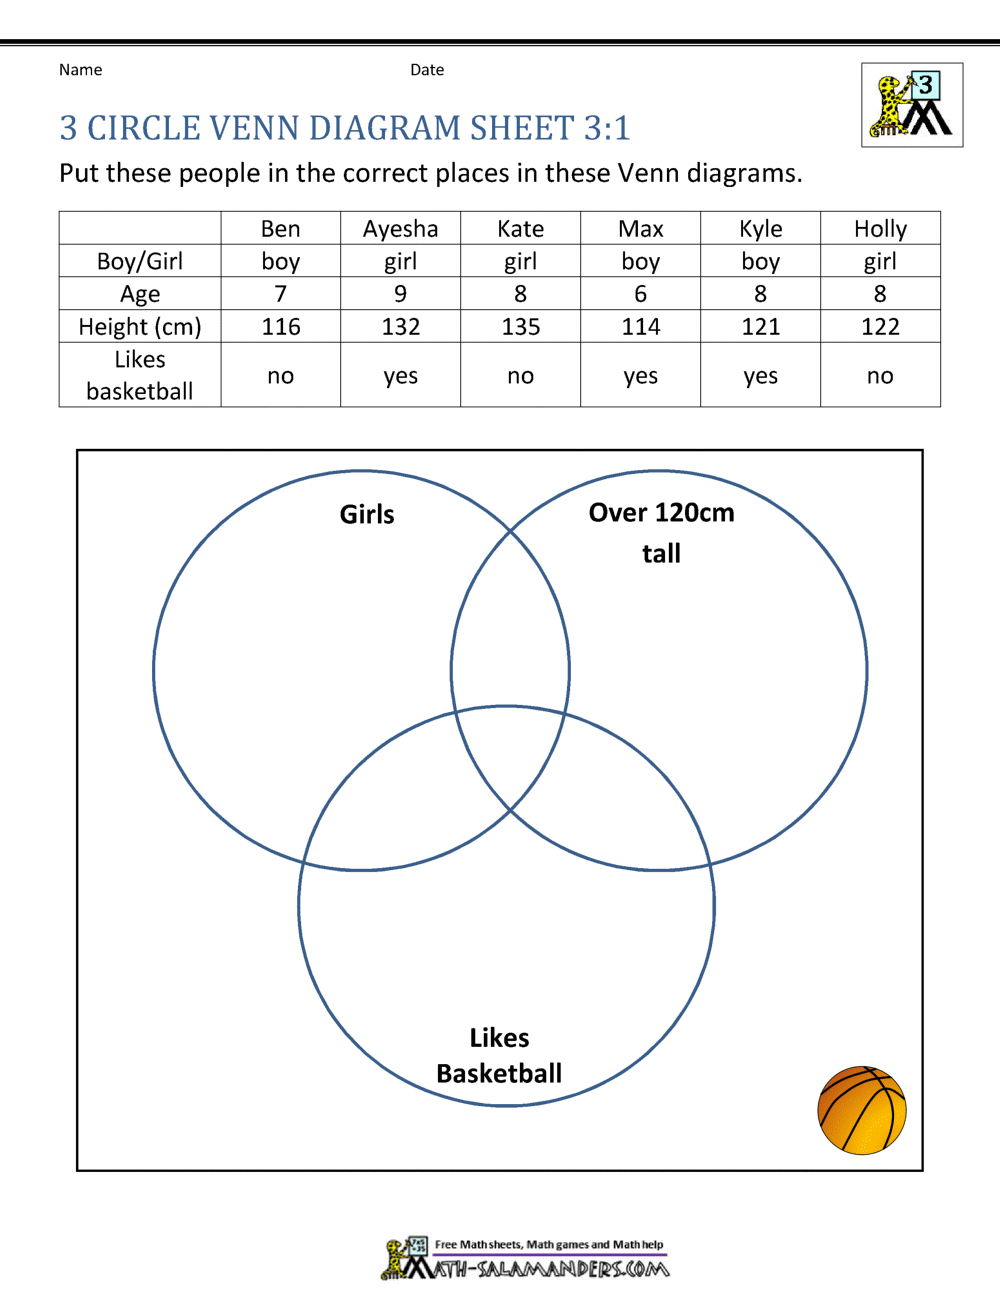 3 Circle Venn Diagram Worksheet Drivenheisenberg